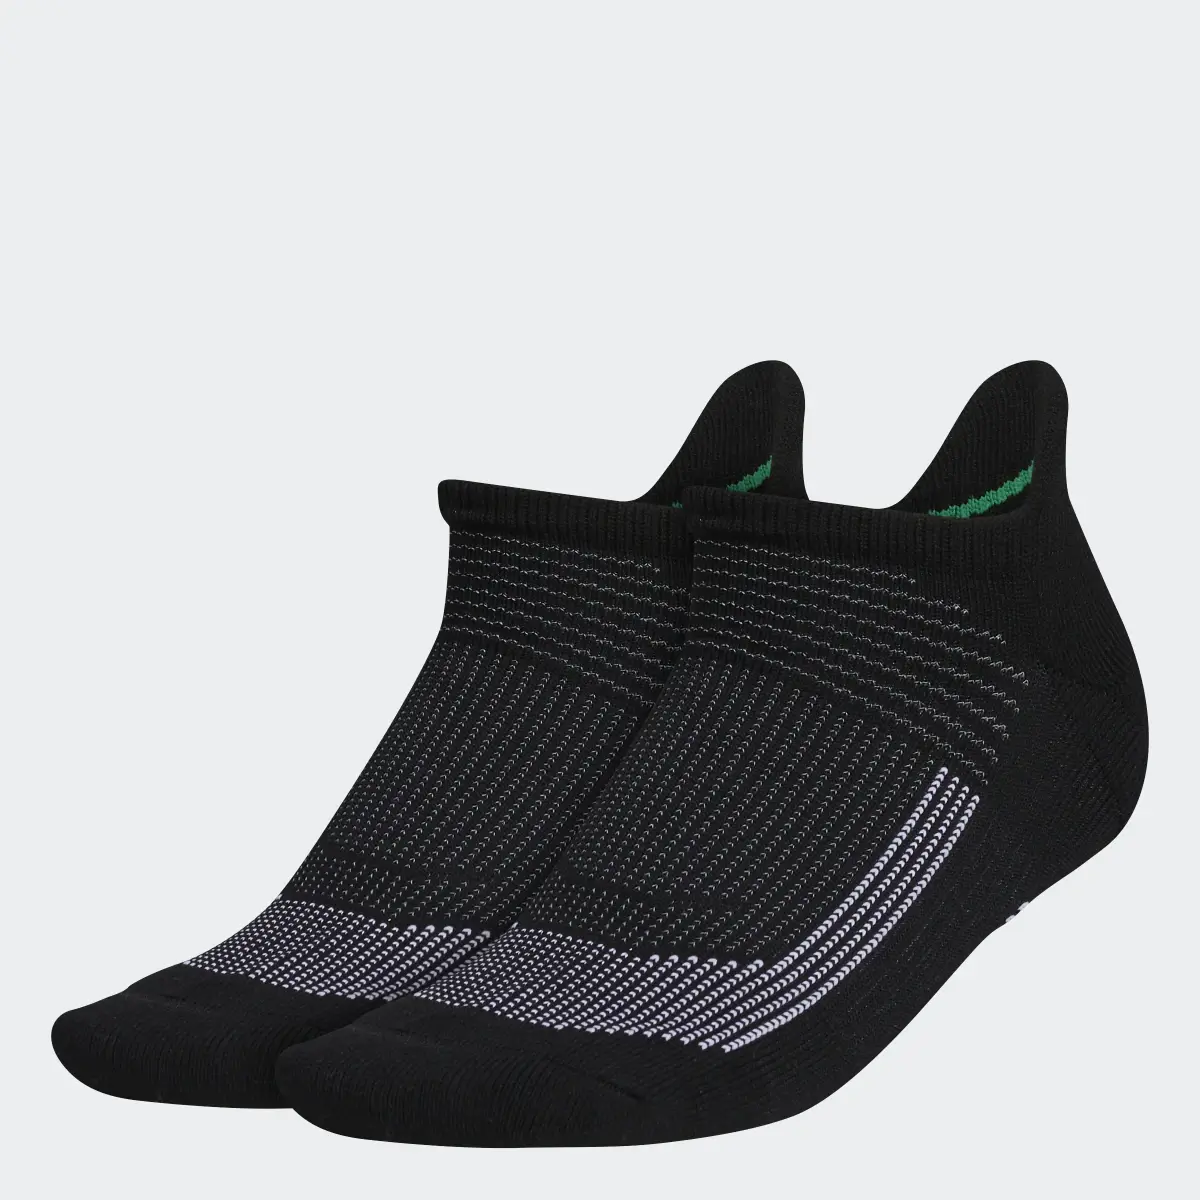 Adidas Superlite Ultraboost Tabbed No-Show Socks 2 Pairs. 1